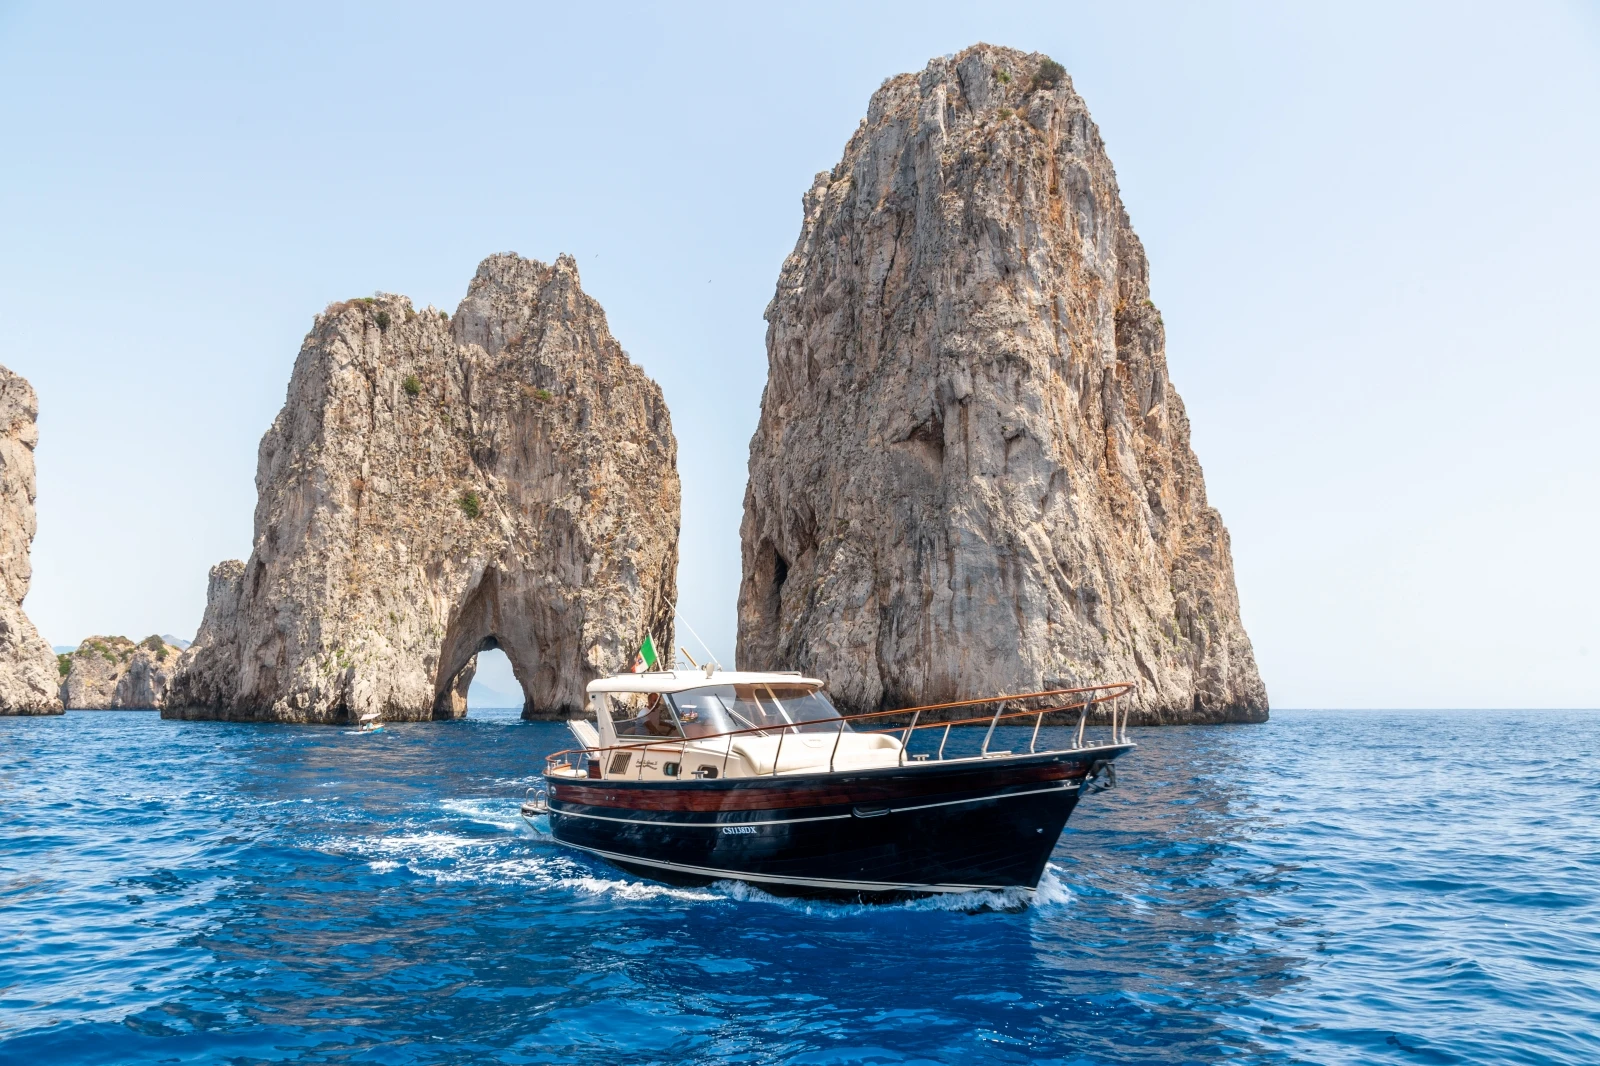 Capri Boat Tour with Gozzo Sorrentino